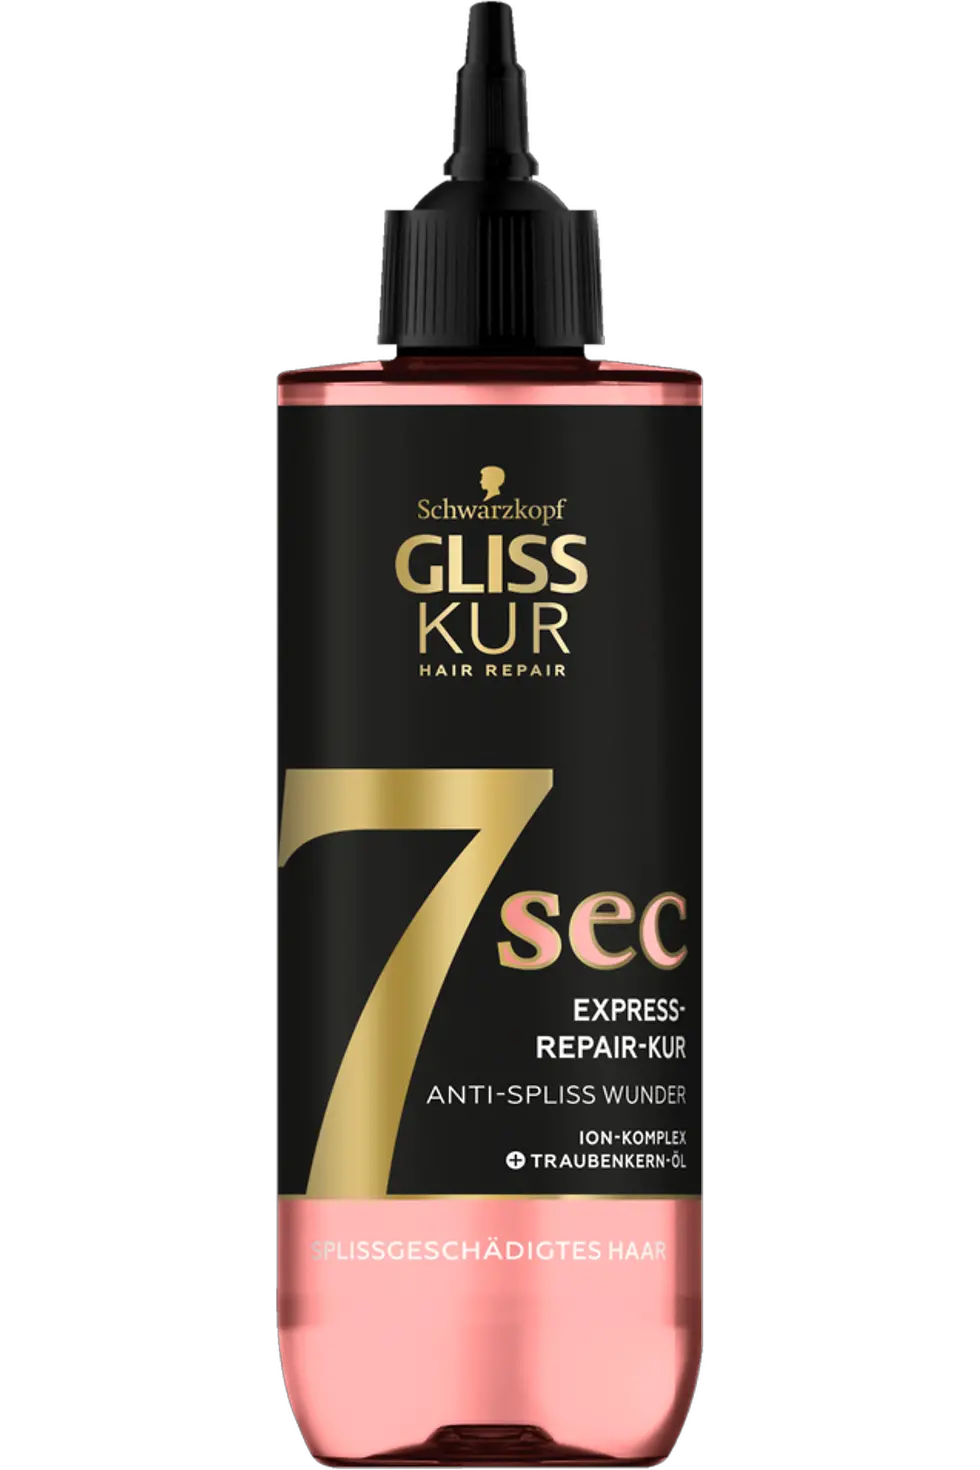 
Gliss 7 Sec Express-Repair-Kur Anti-Spliss Wunder